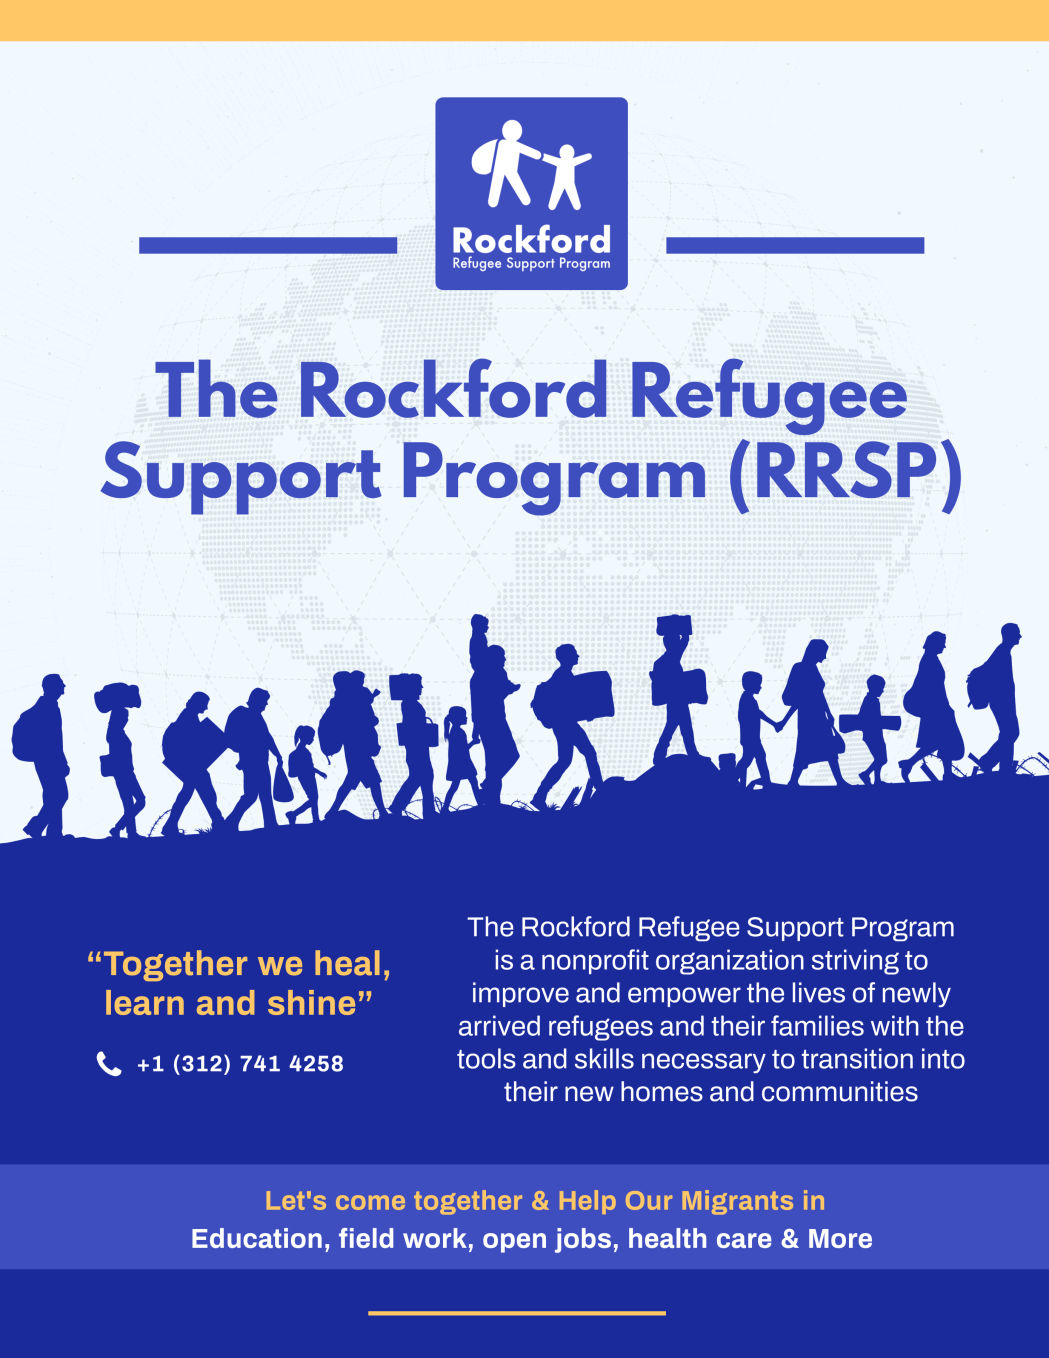 The Rockford Refugee Support Program